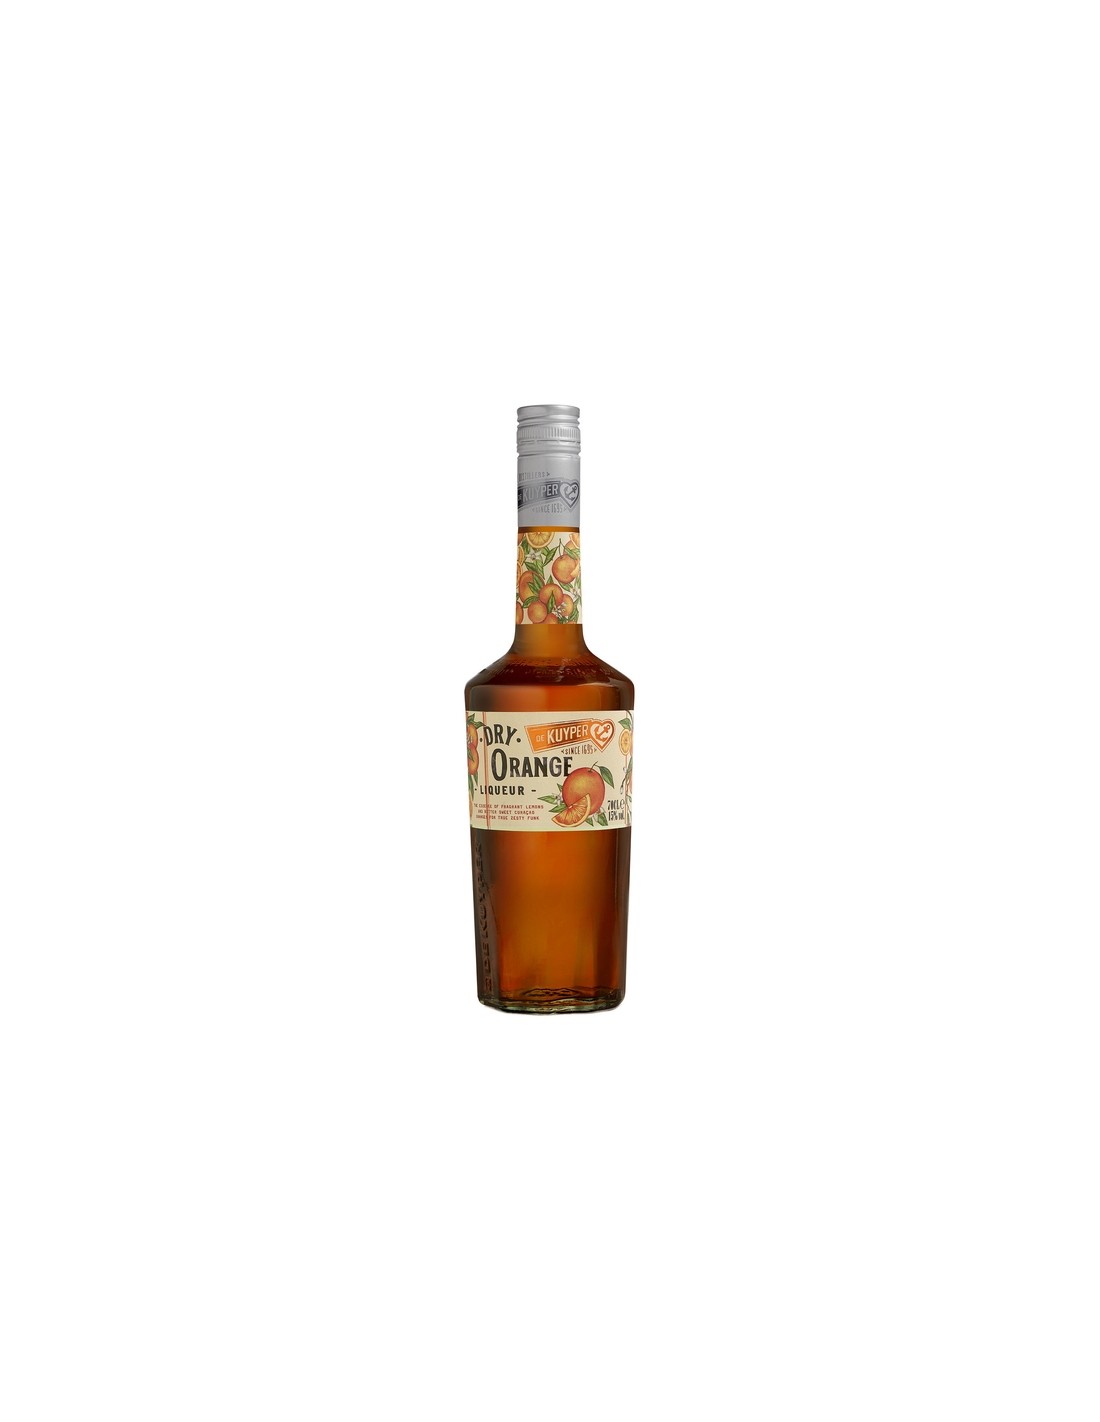 Lichior De Kuyper Dry Orange, 15% alc., 0.7L, Olanda alcooldiscount.ro